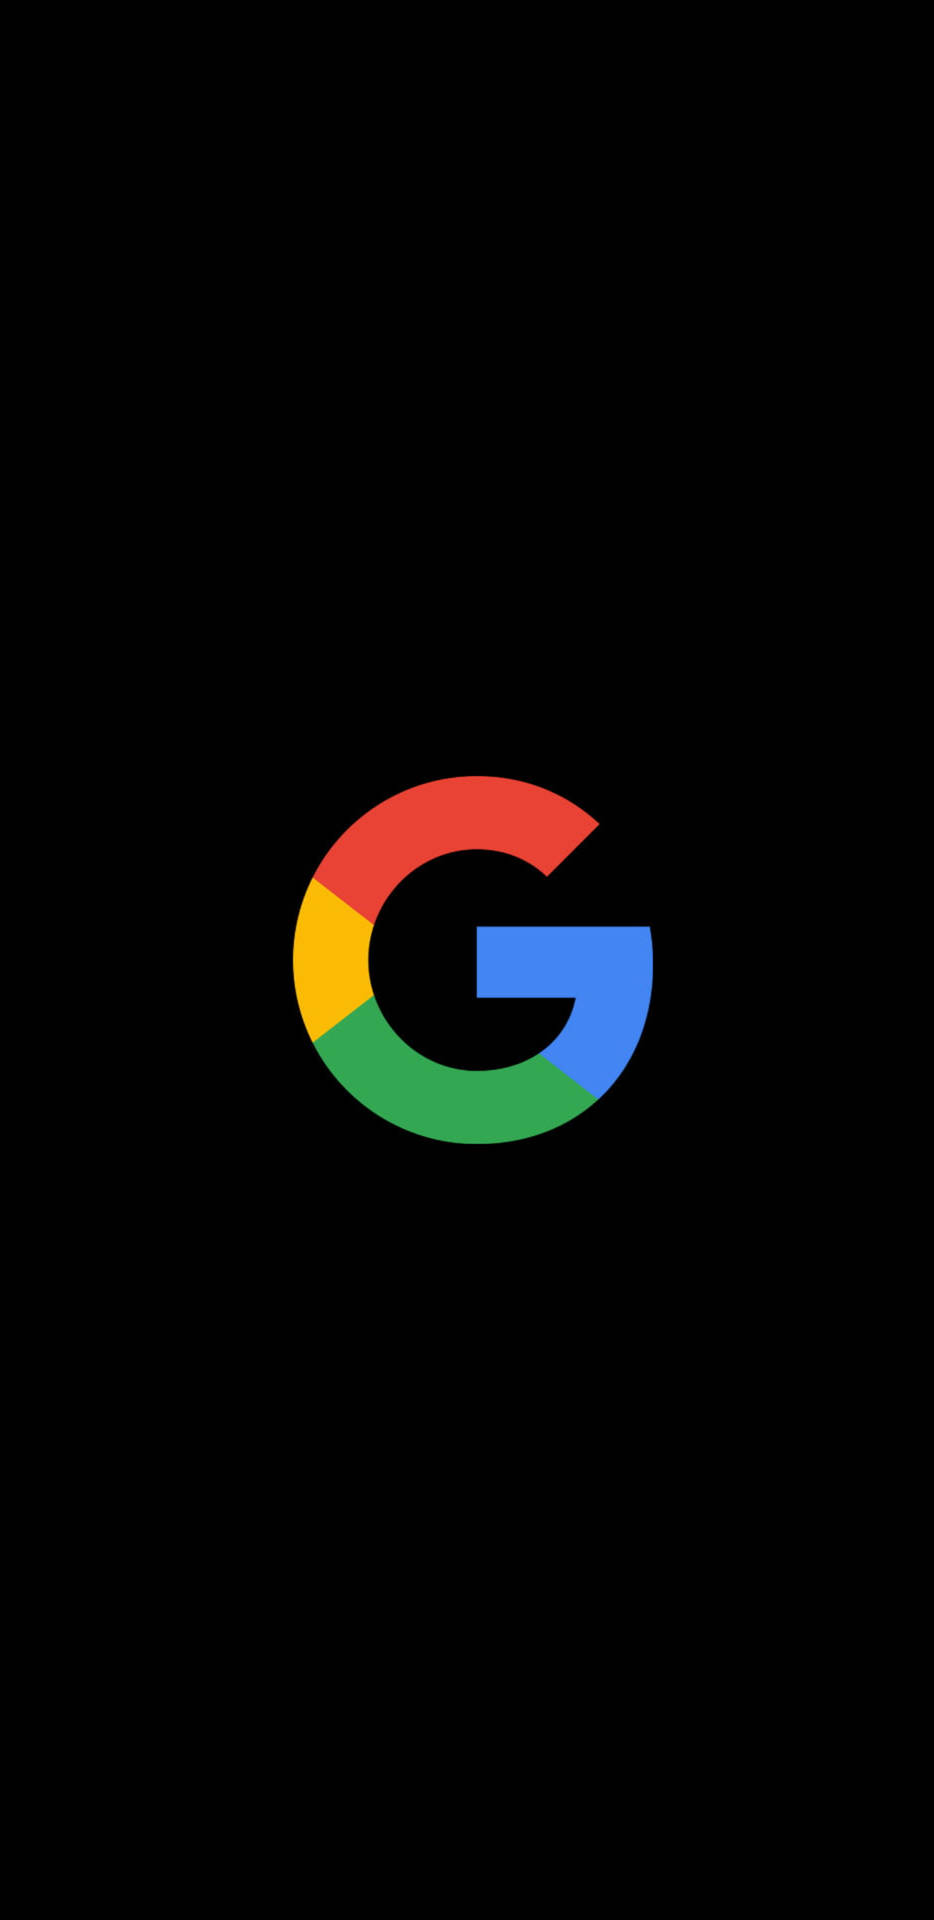 Simple Google Logo 2K Amoled Wallpaper